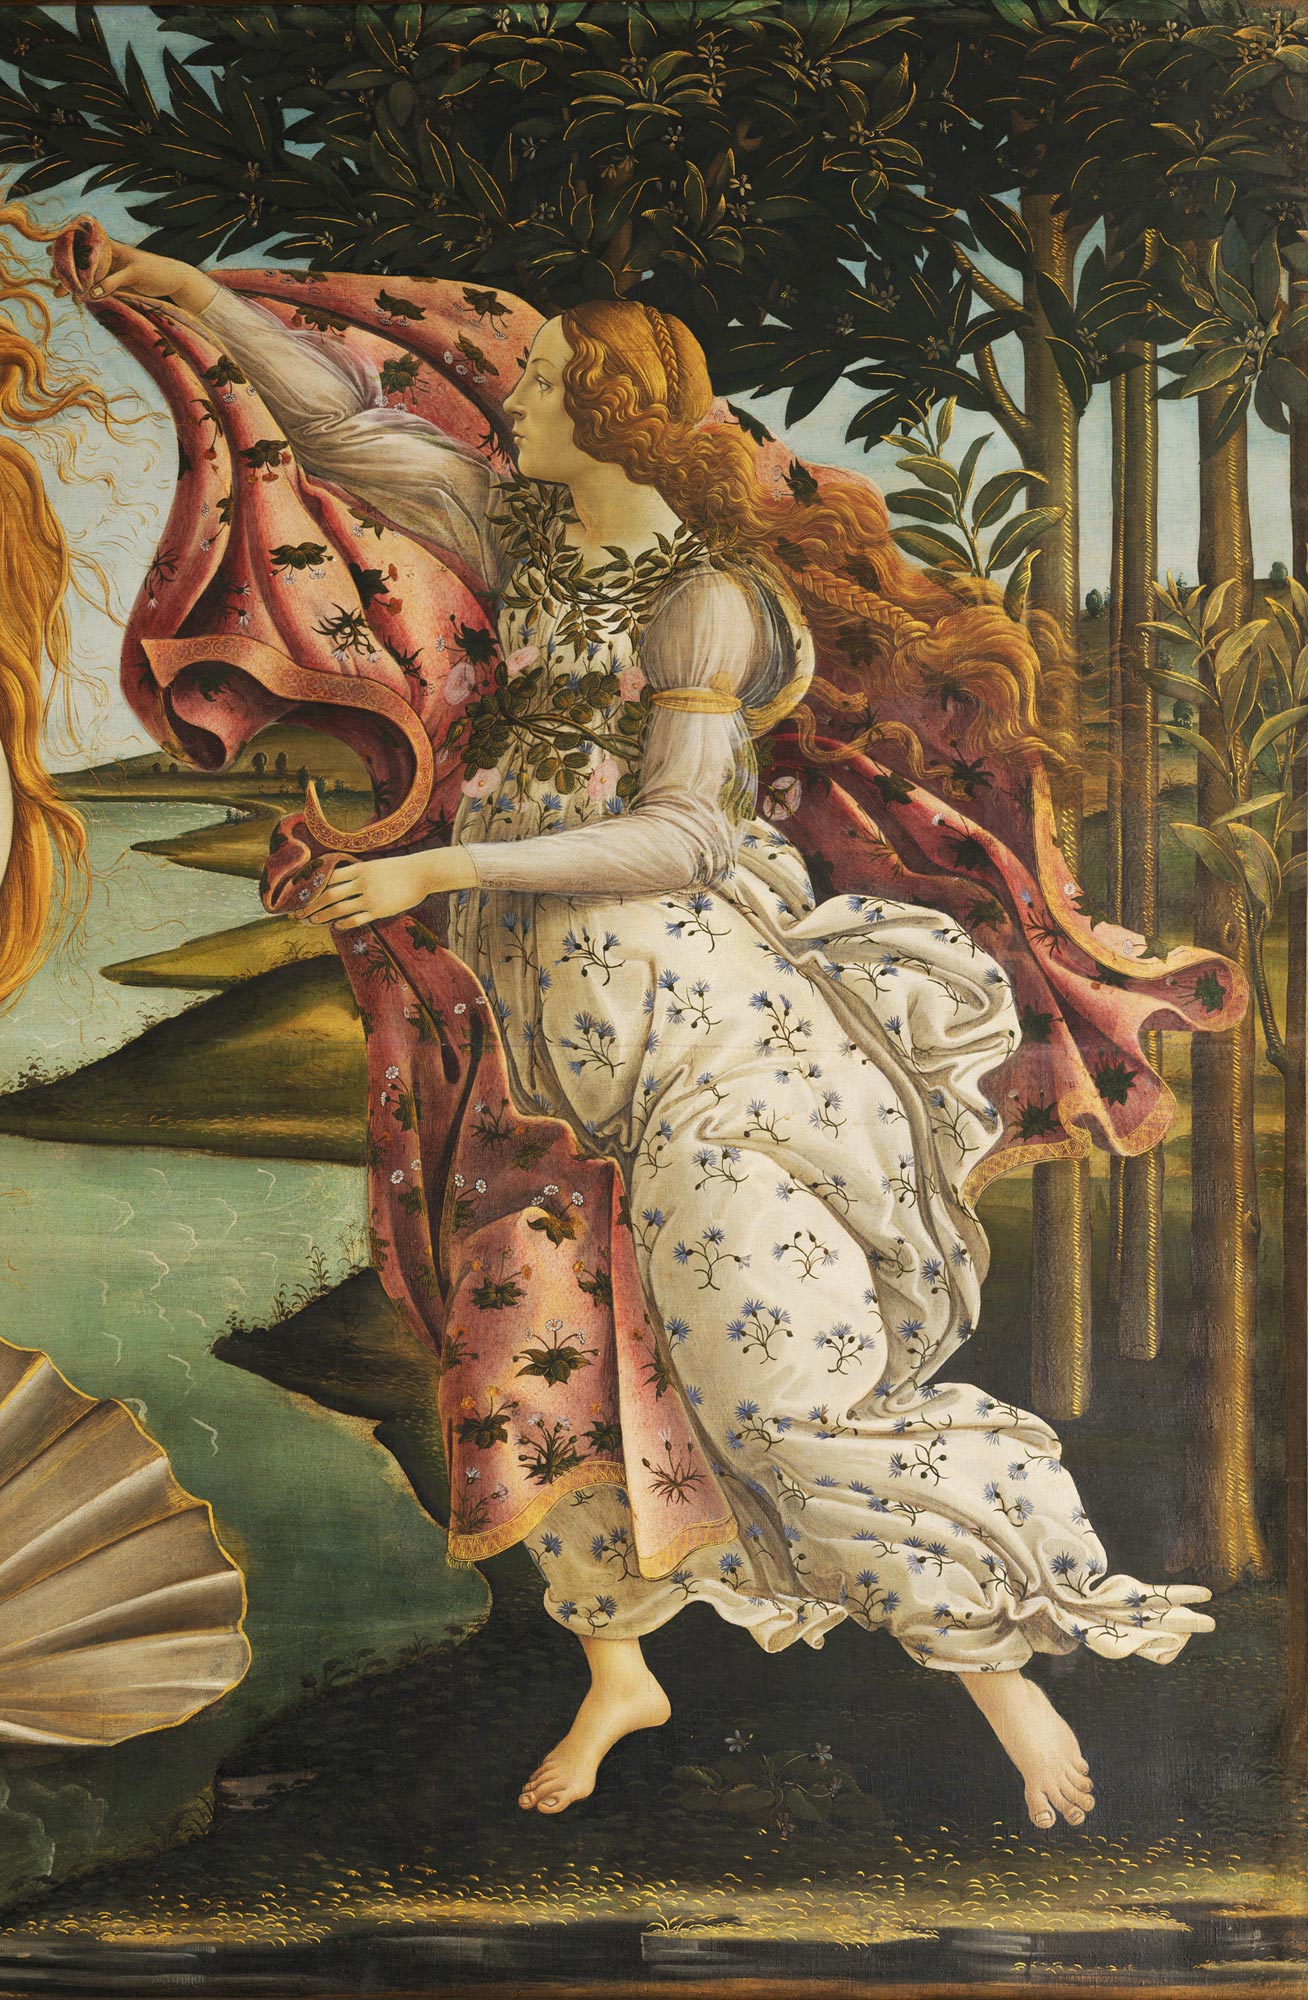 Sandro Botticelli, Birth of Venus, The Hour of Spring